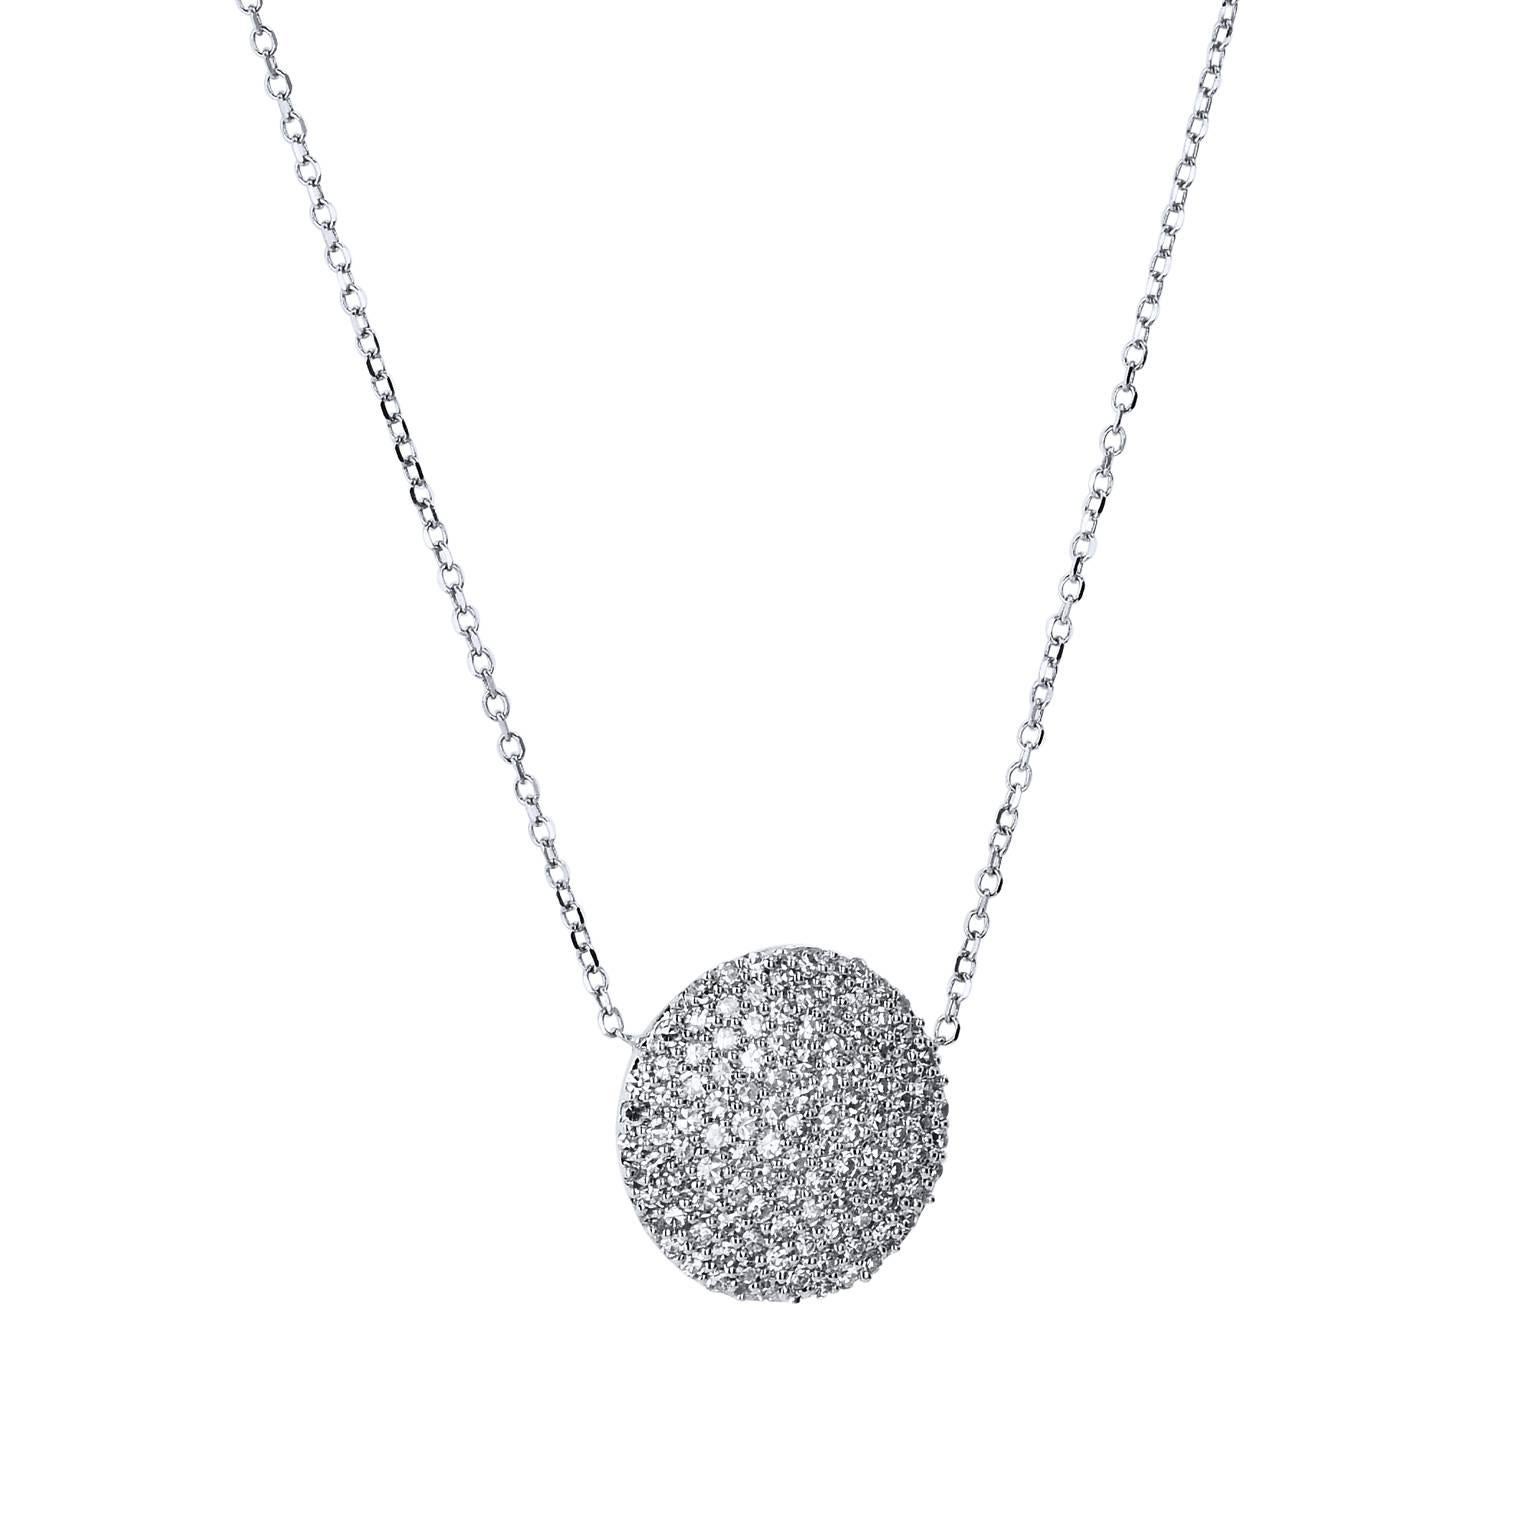 0.50 carat of pave-set diamond adorn a 14 karat white gold round disc in this pendant necklace.